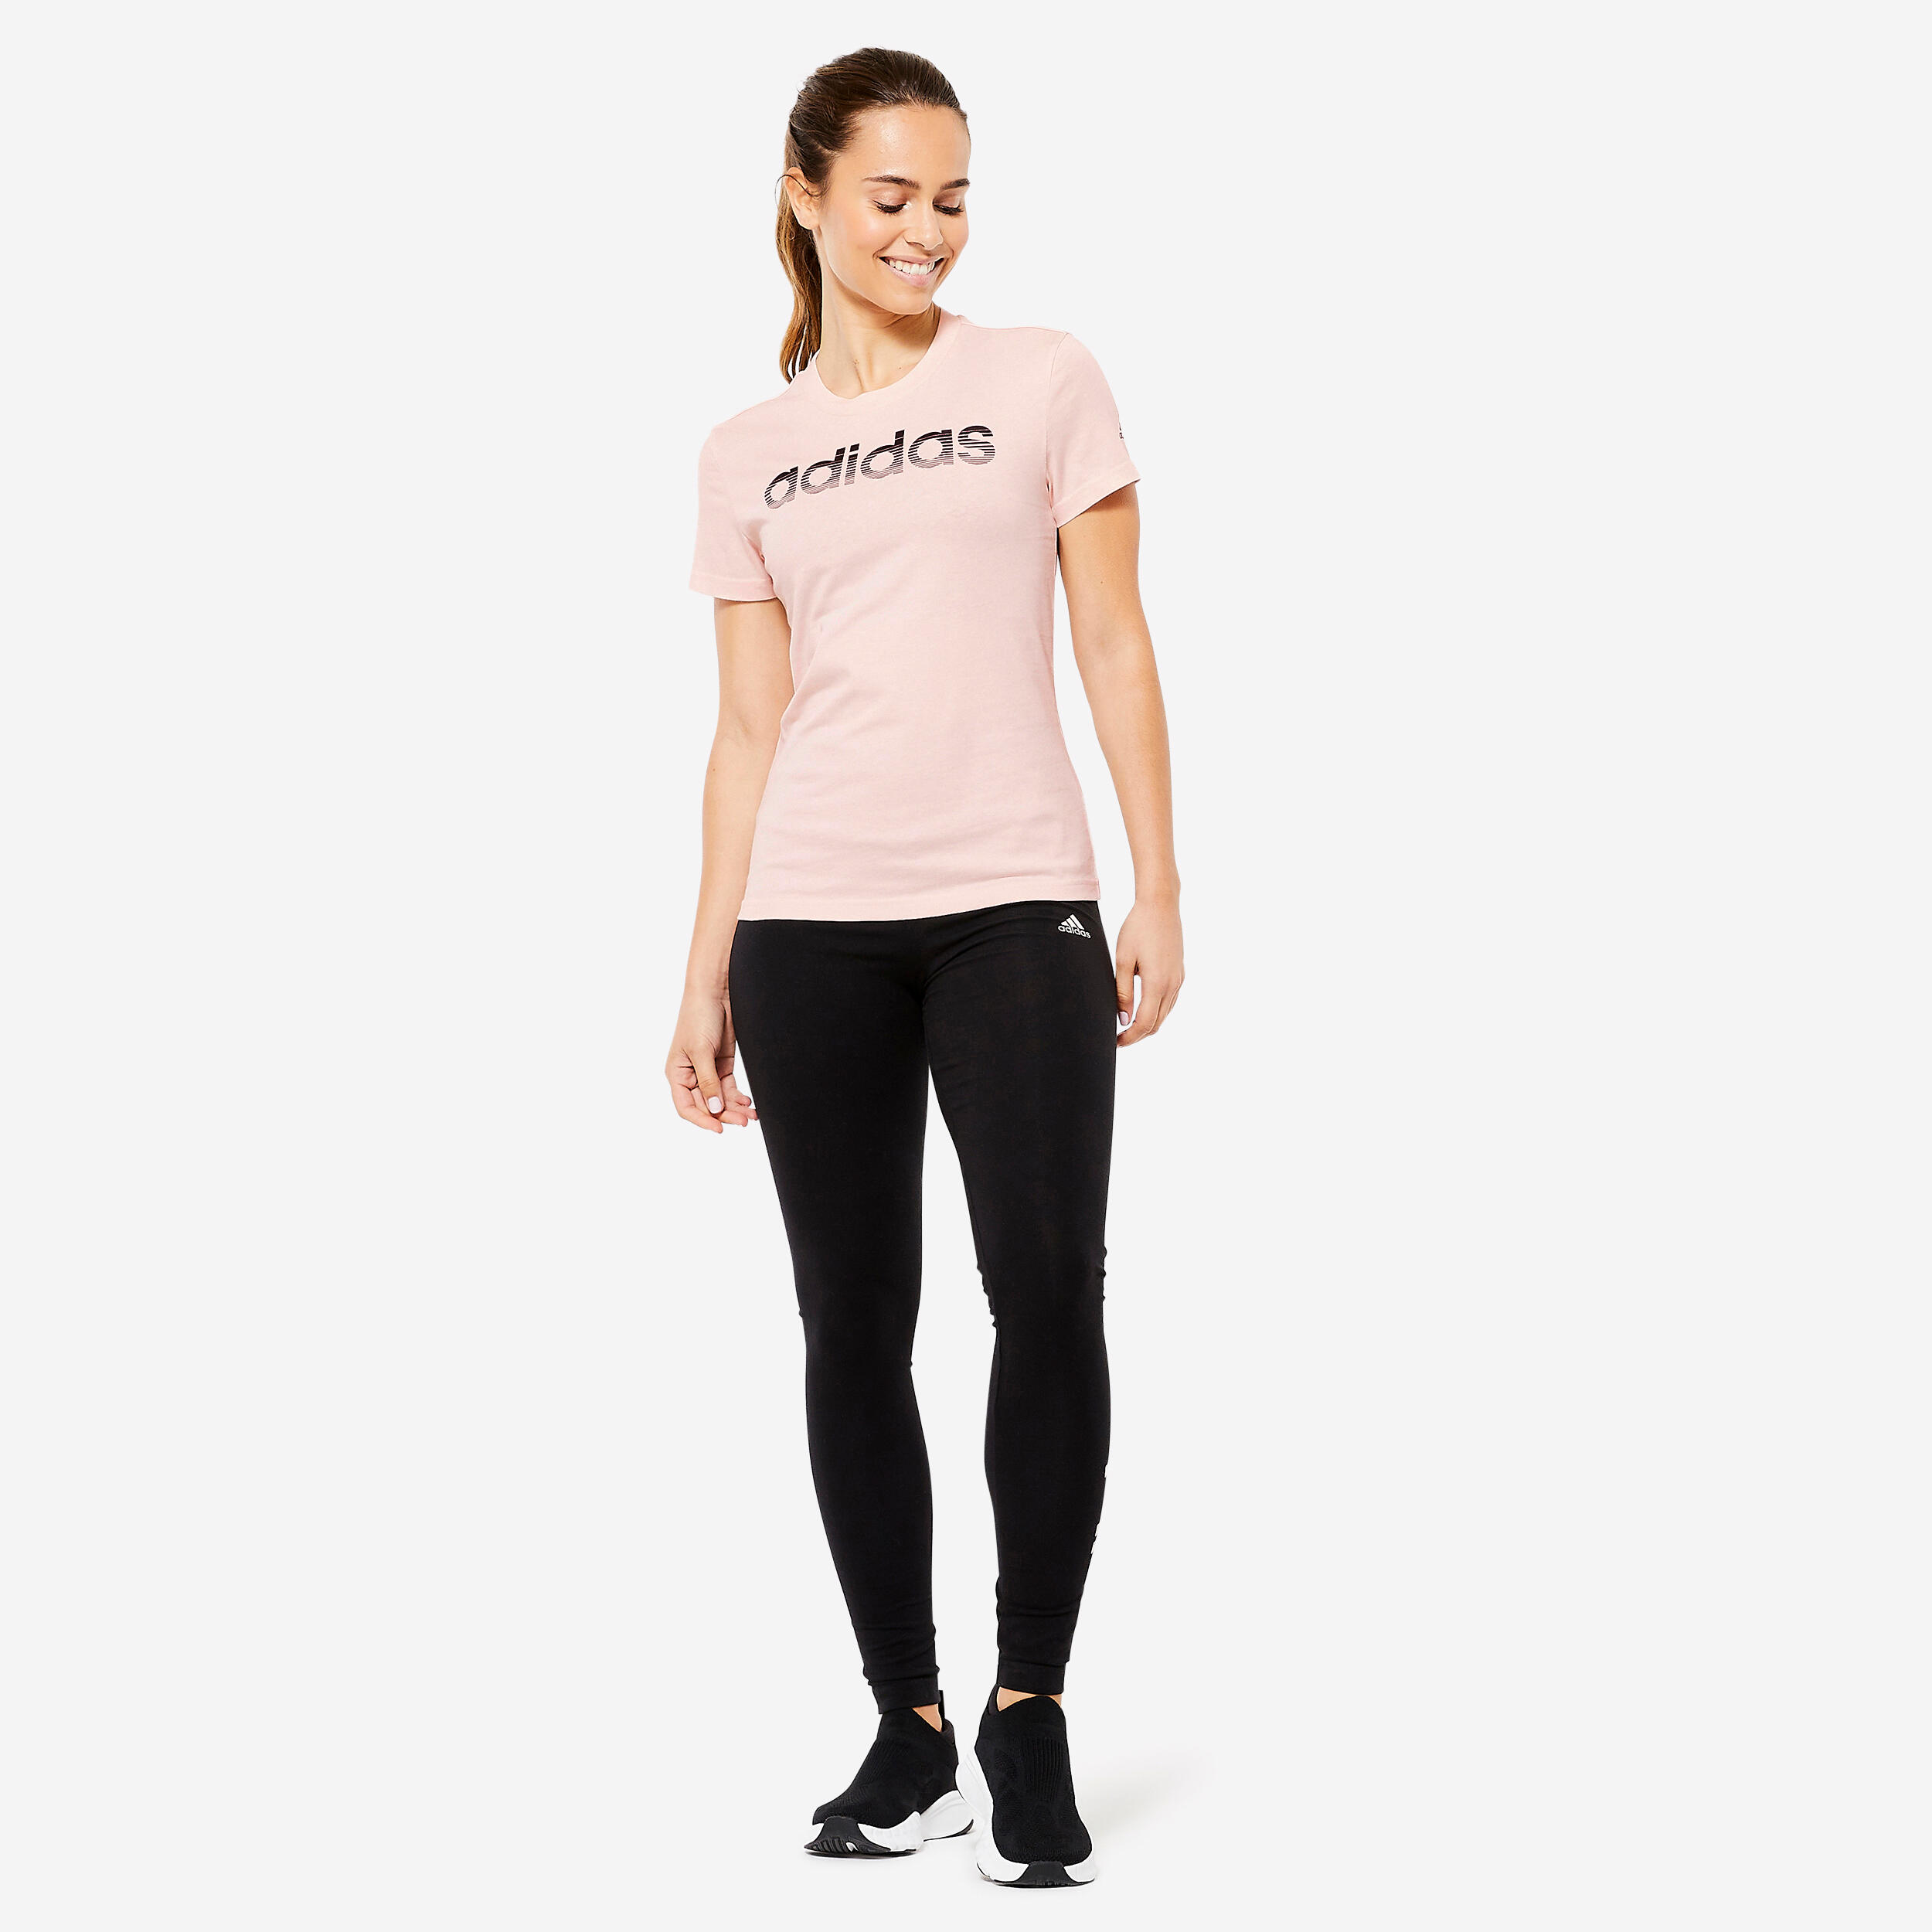 Women's Low-Impact Fitness T-Shirt - Pink 2/4